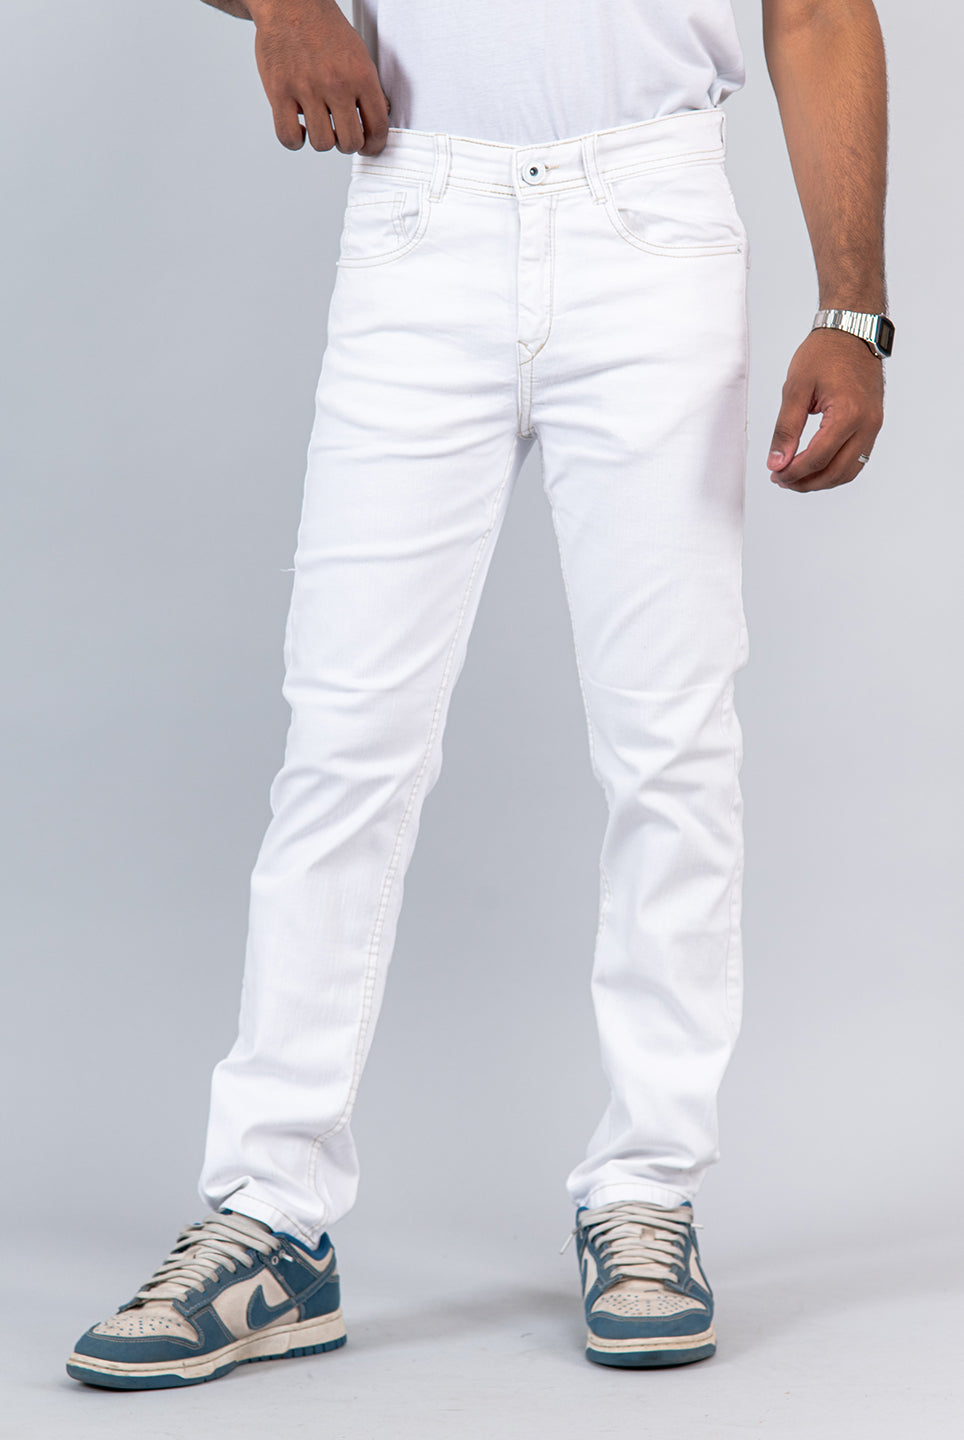 white slim fit denim jeans